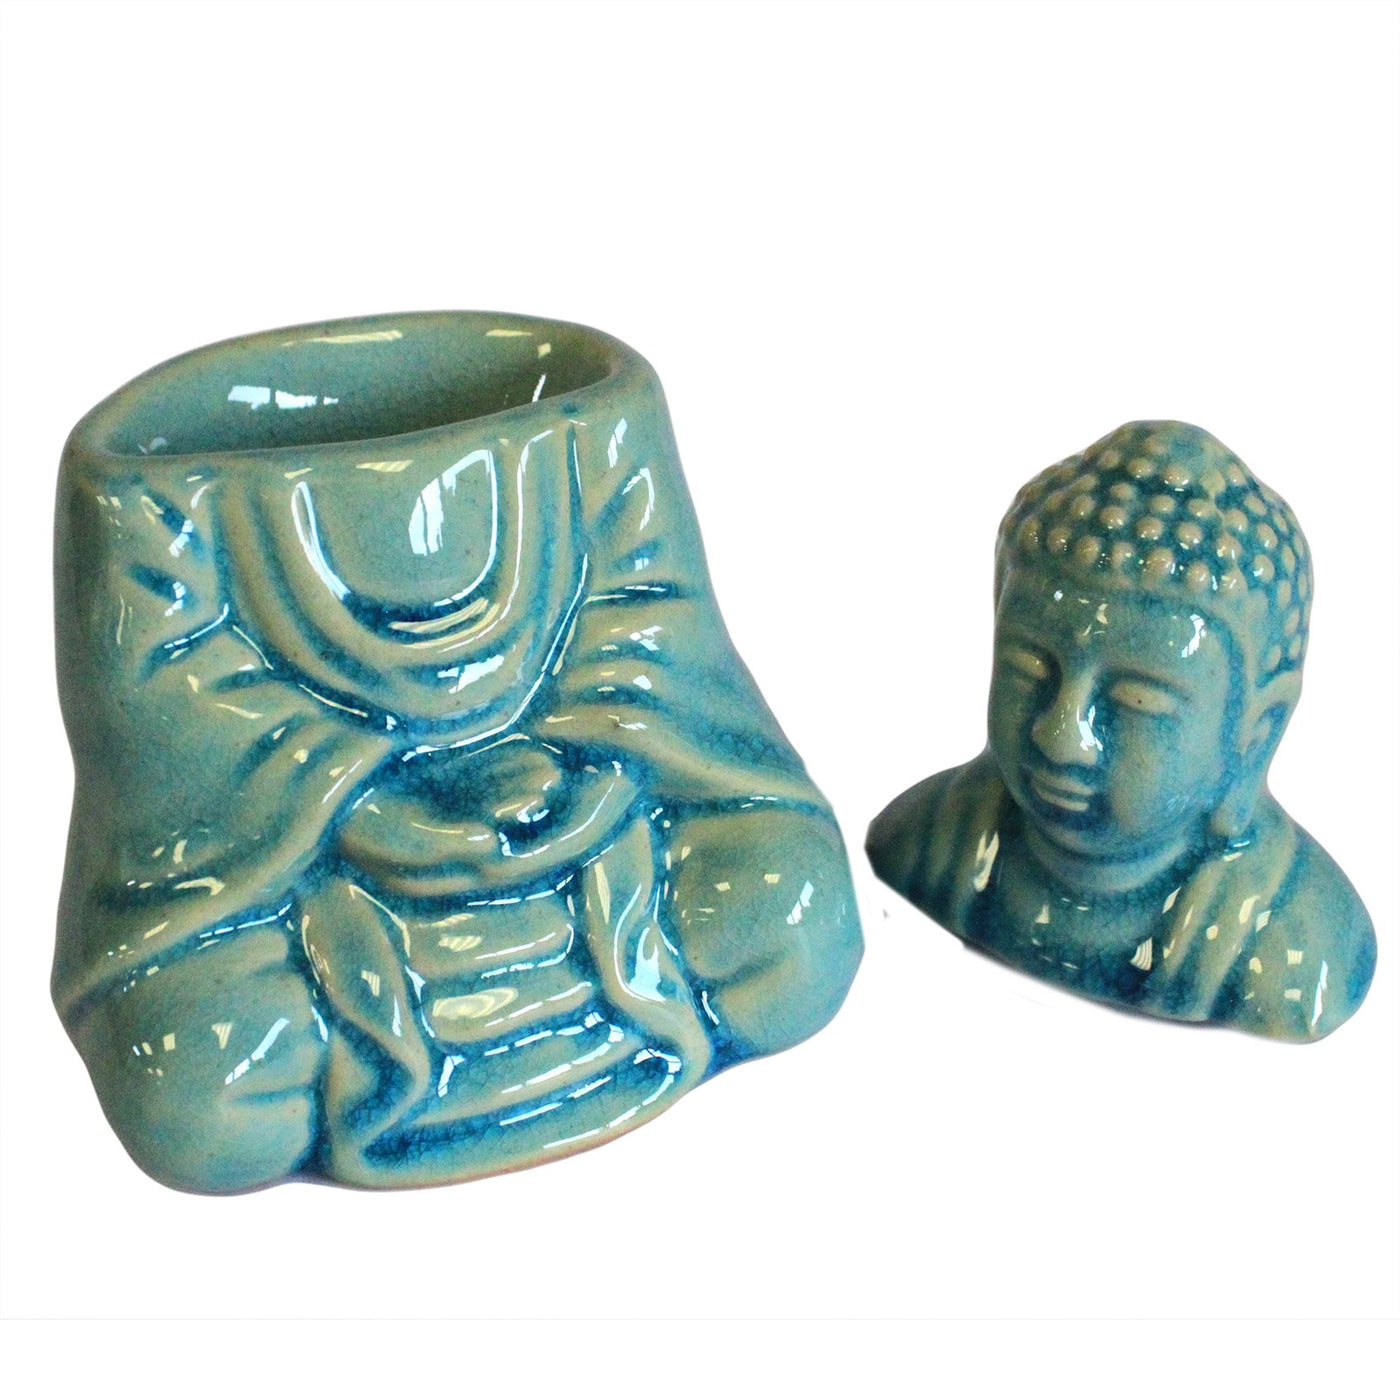 Blue Glazed Sitting Buddha Oil Burner.